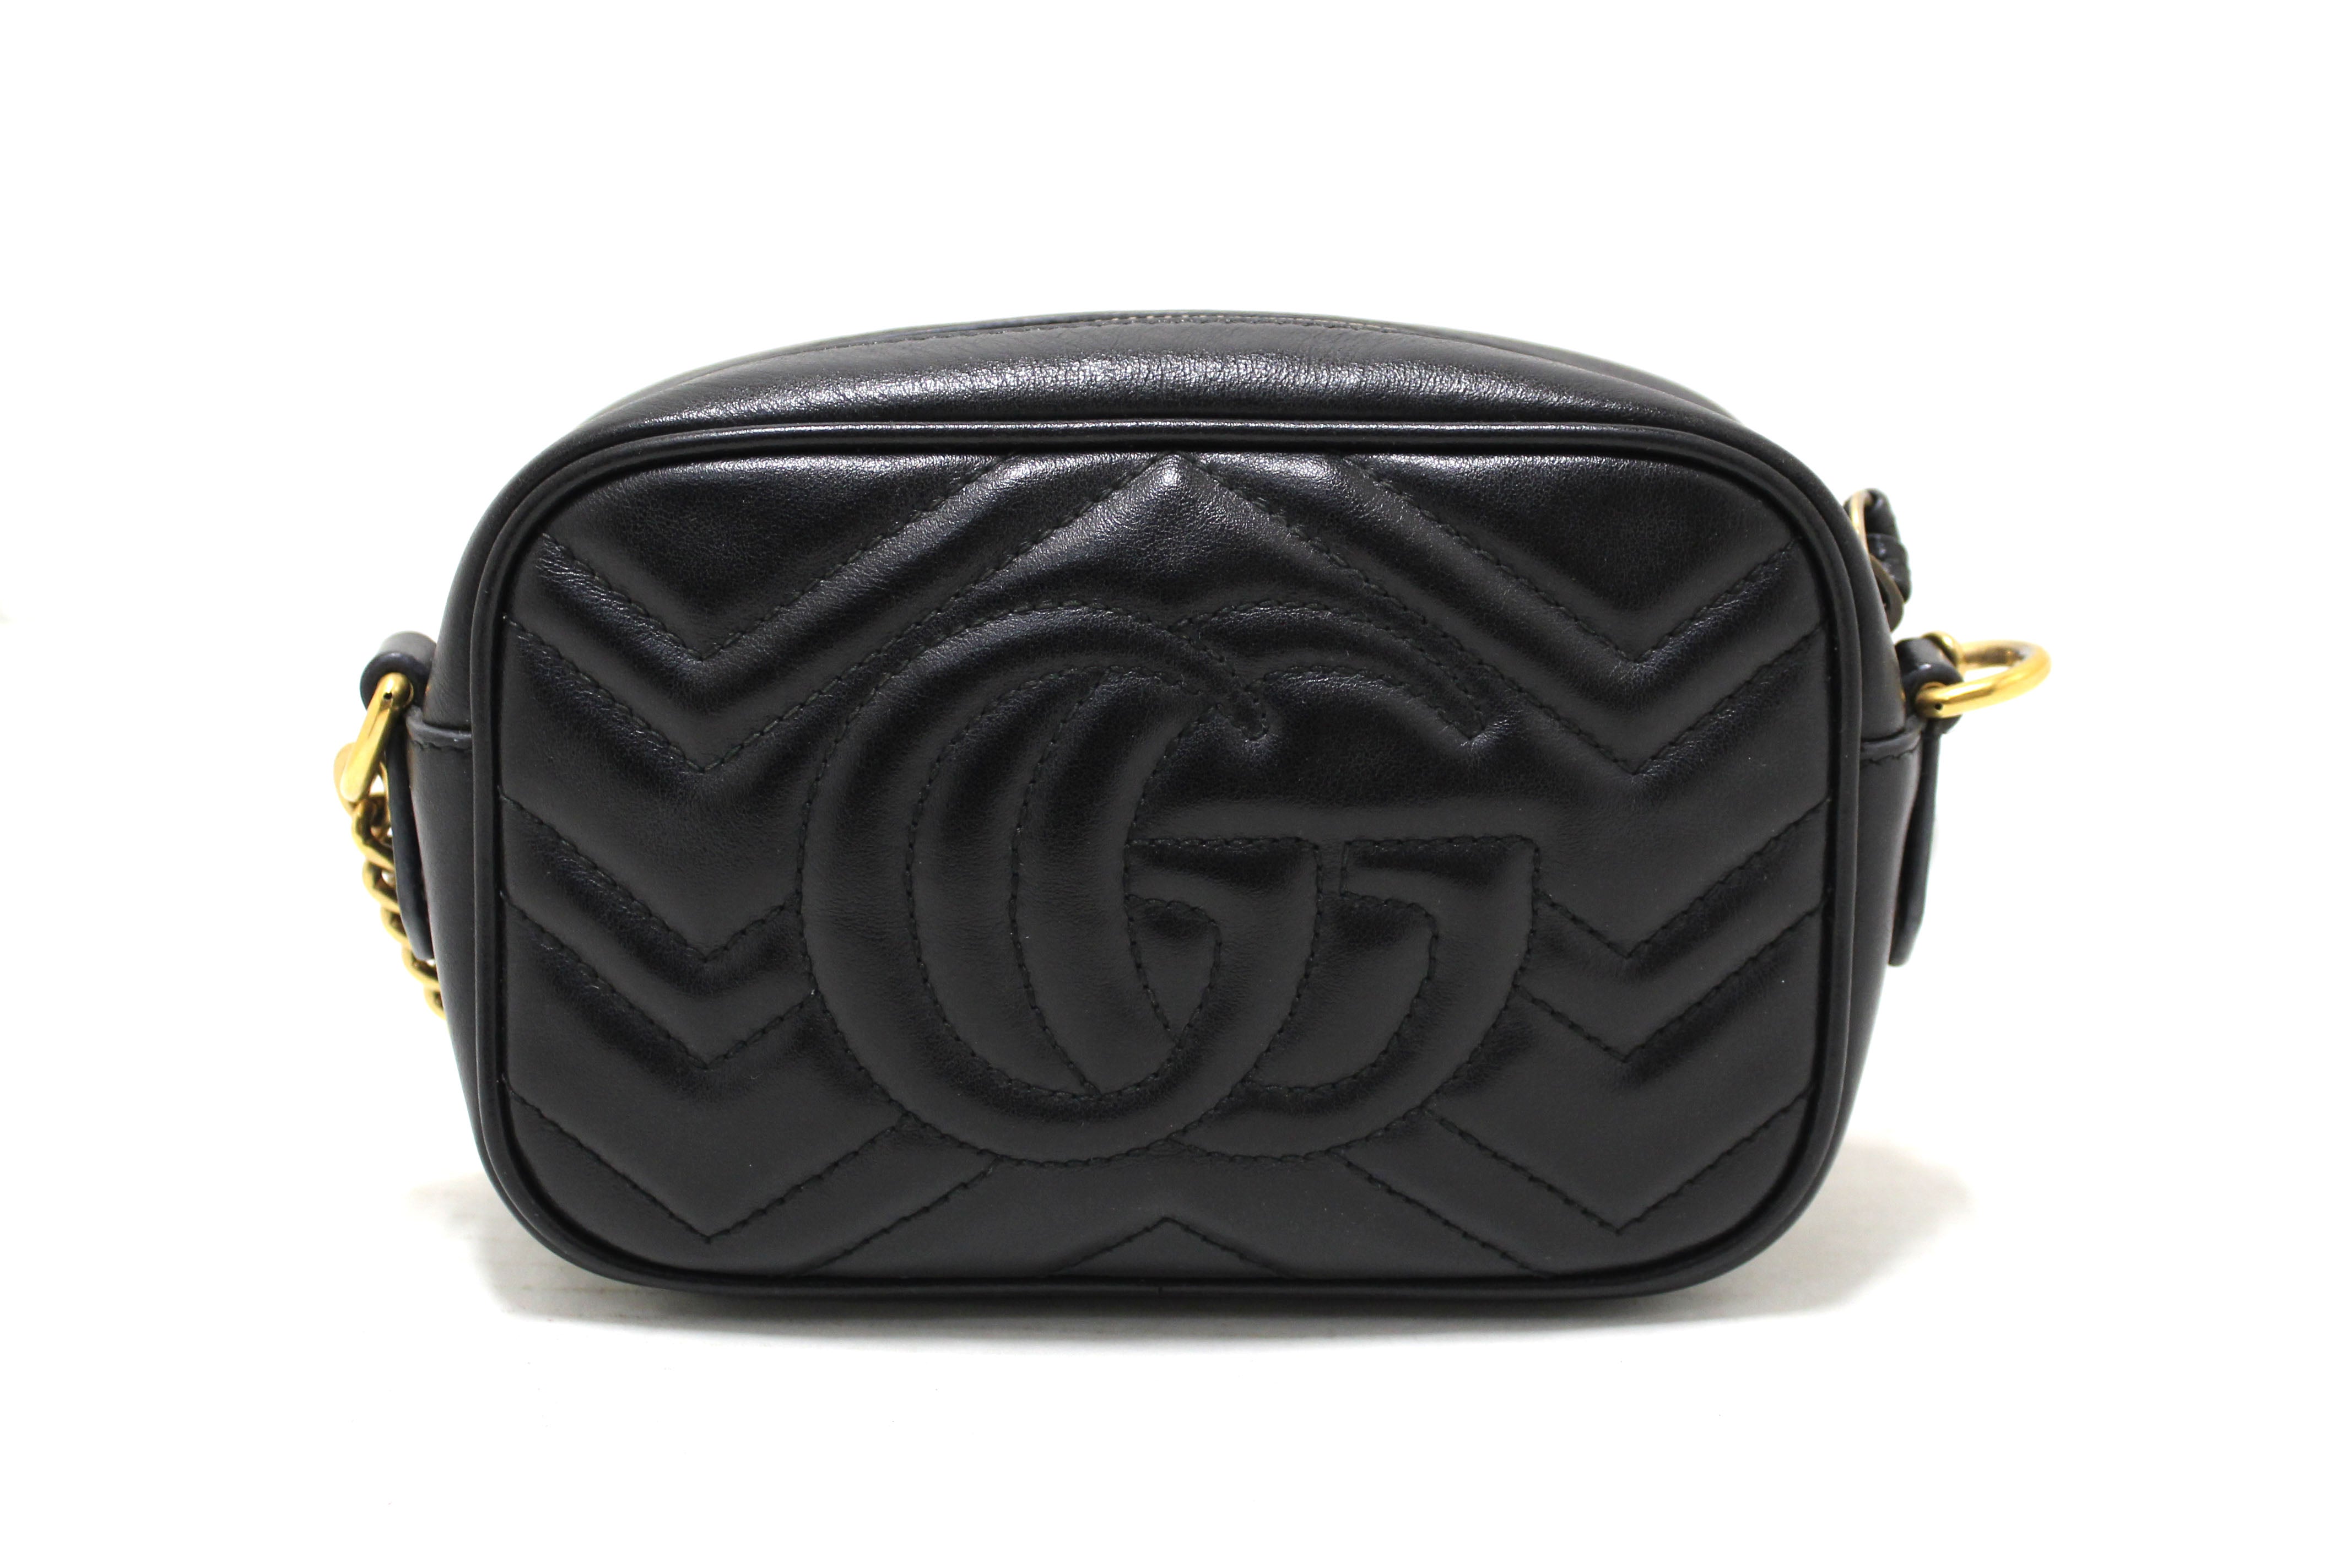 Gucci Black Leather Large GG Marmont Shoulder Bag Gucci